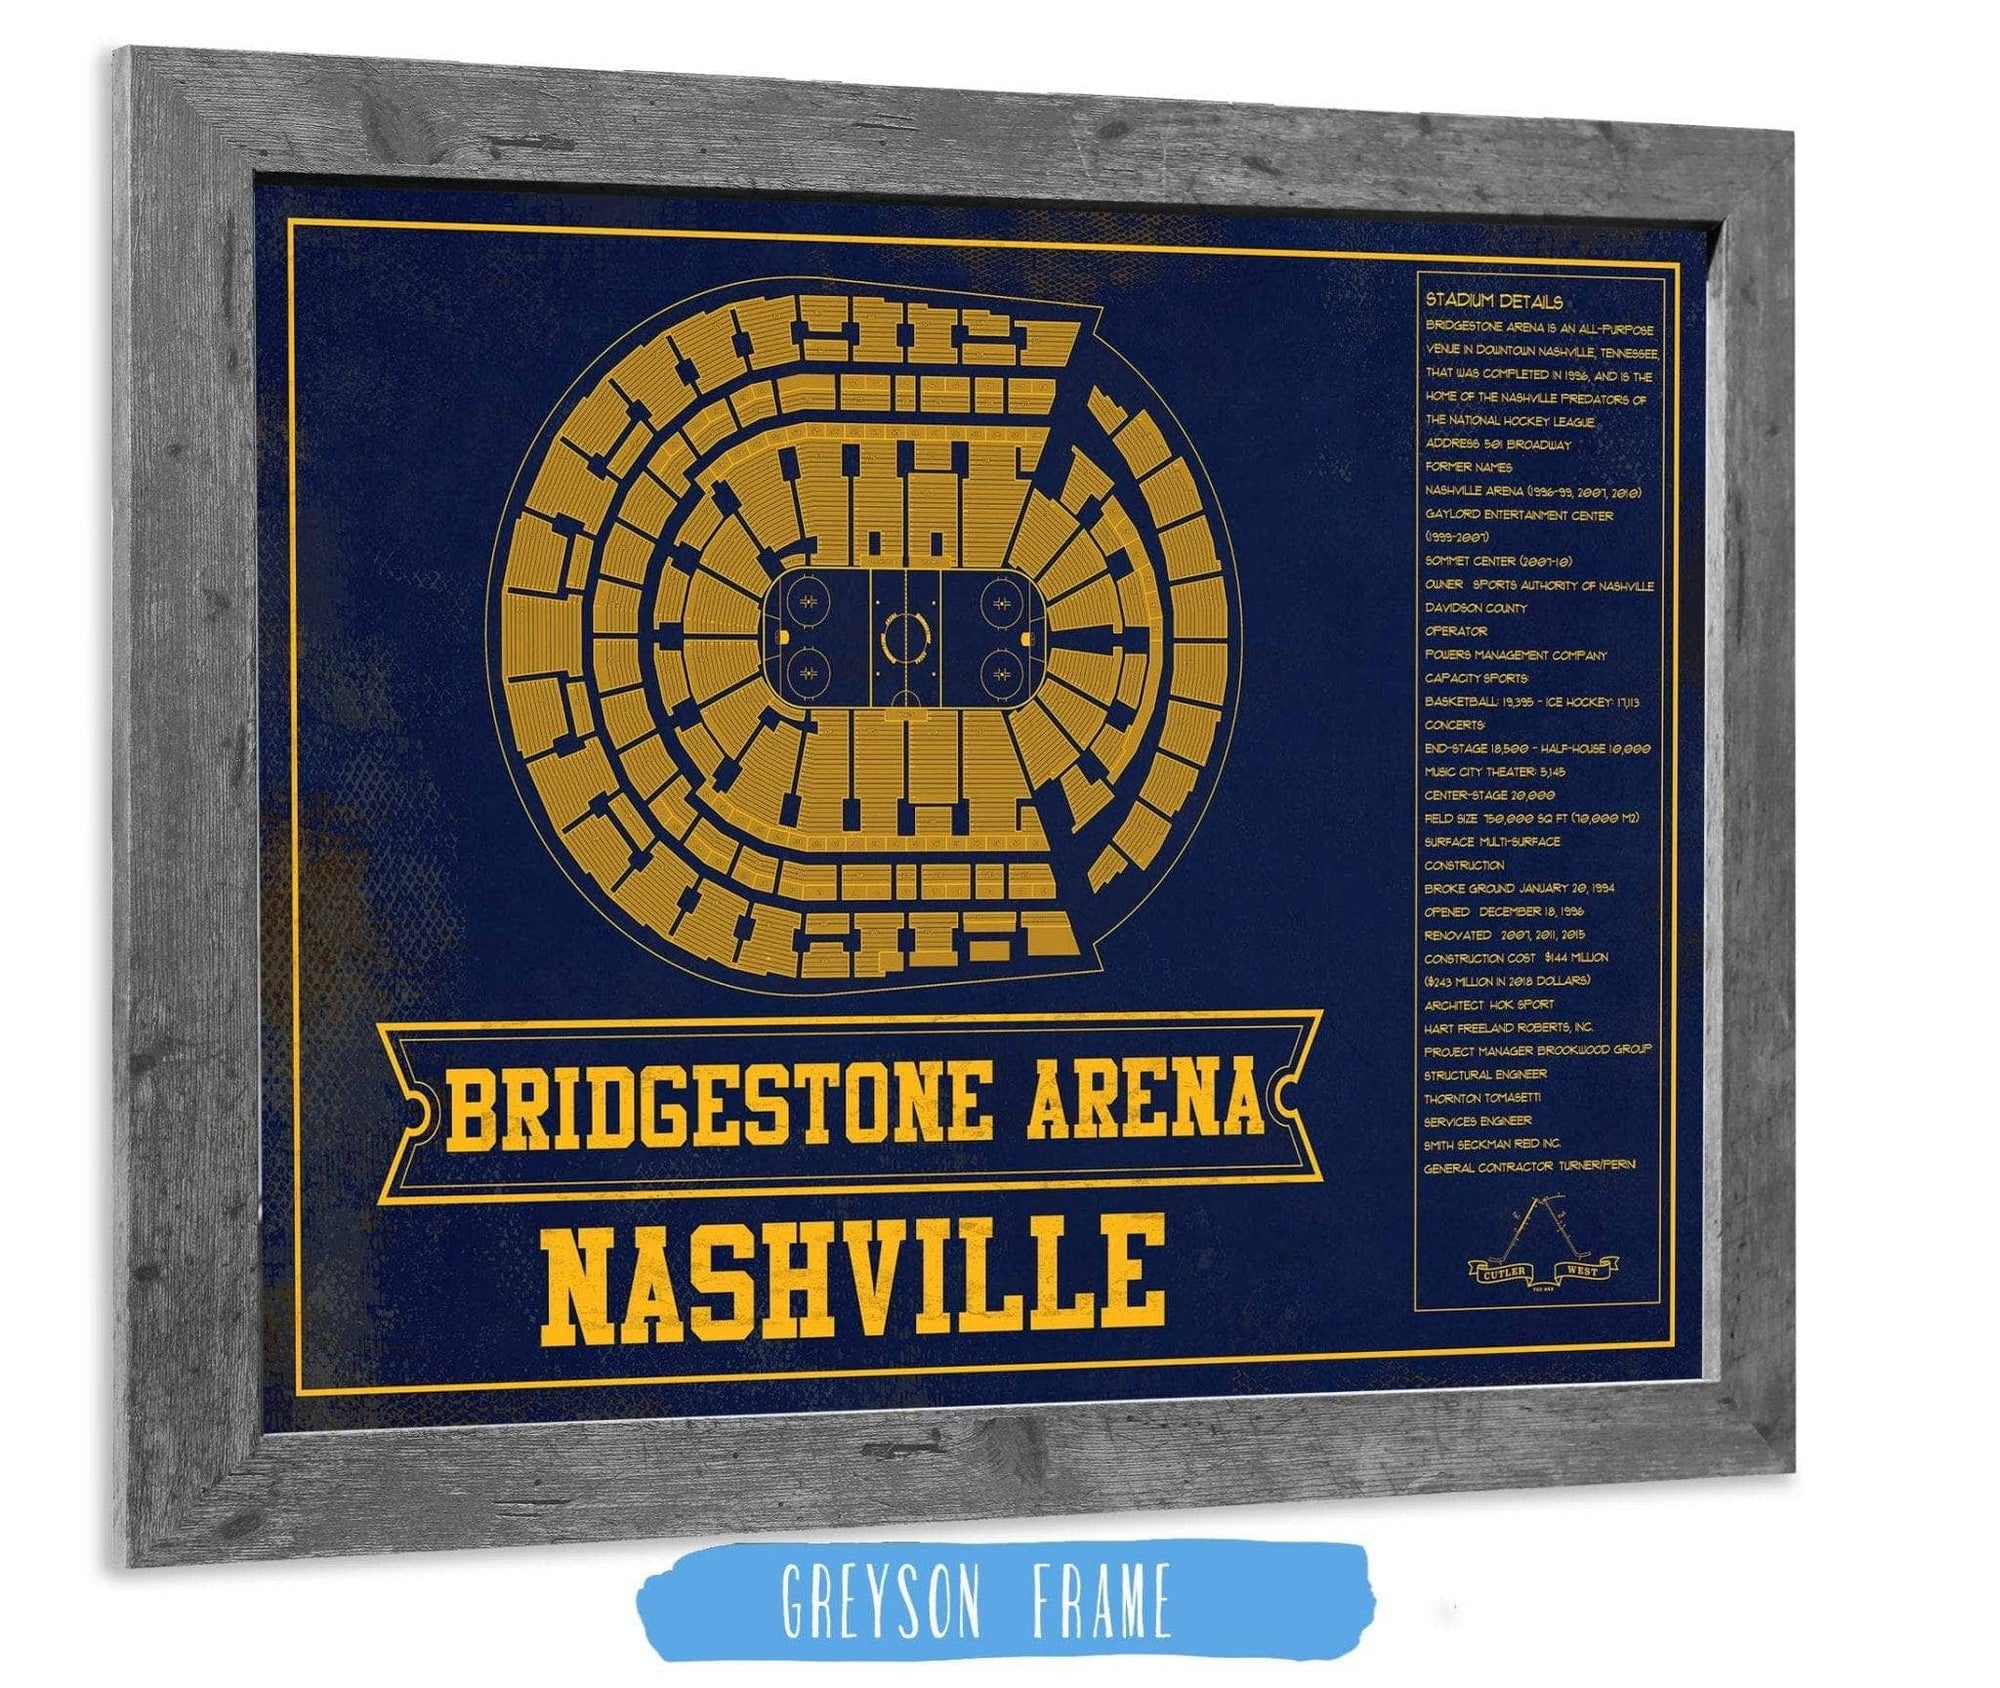 Cutler West 14" x 11" / Greyson Frame Nashville Predators Bridgestone Arena Seating Chart - Vintage Hockey Team Color Print 673823609-TEAM